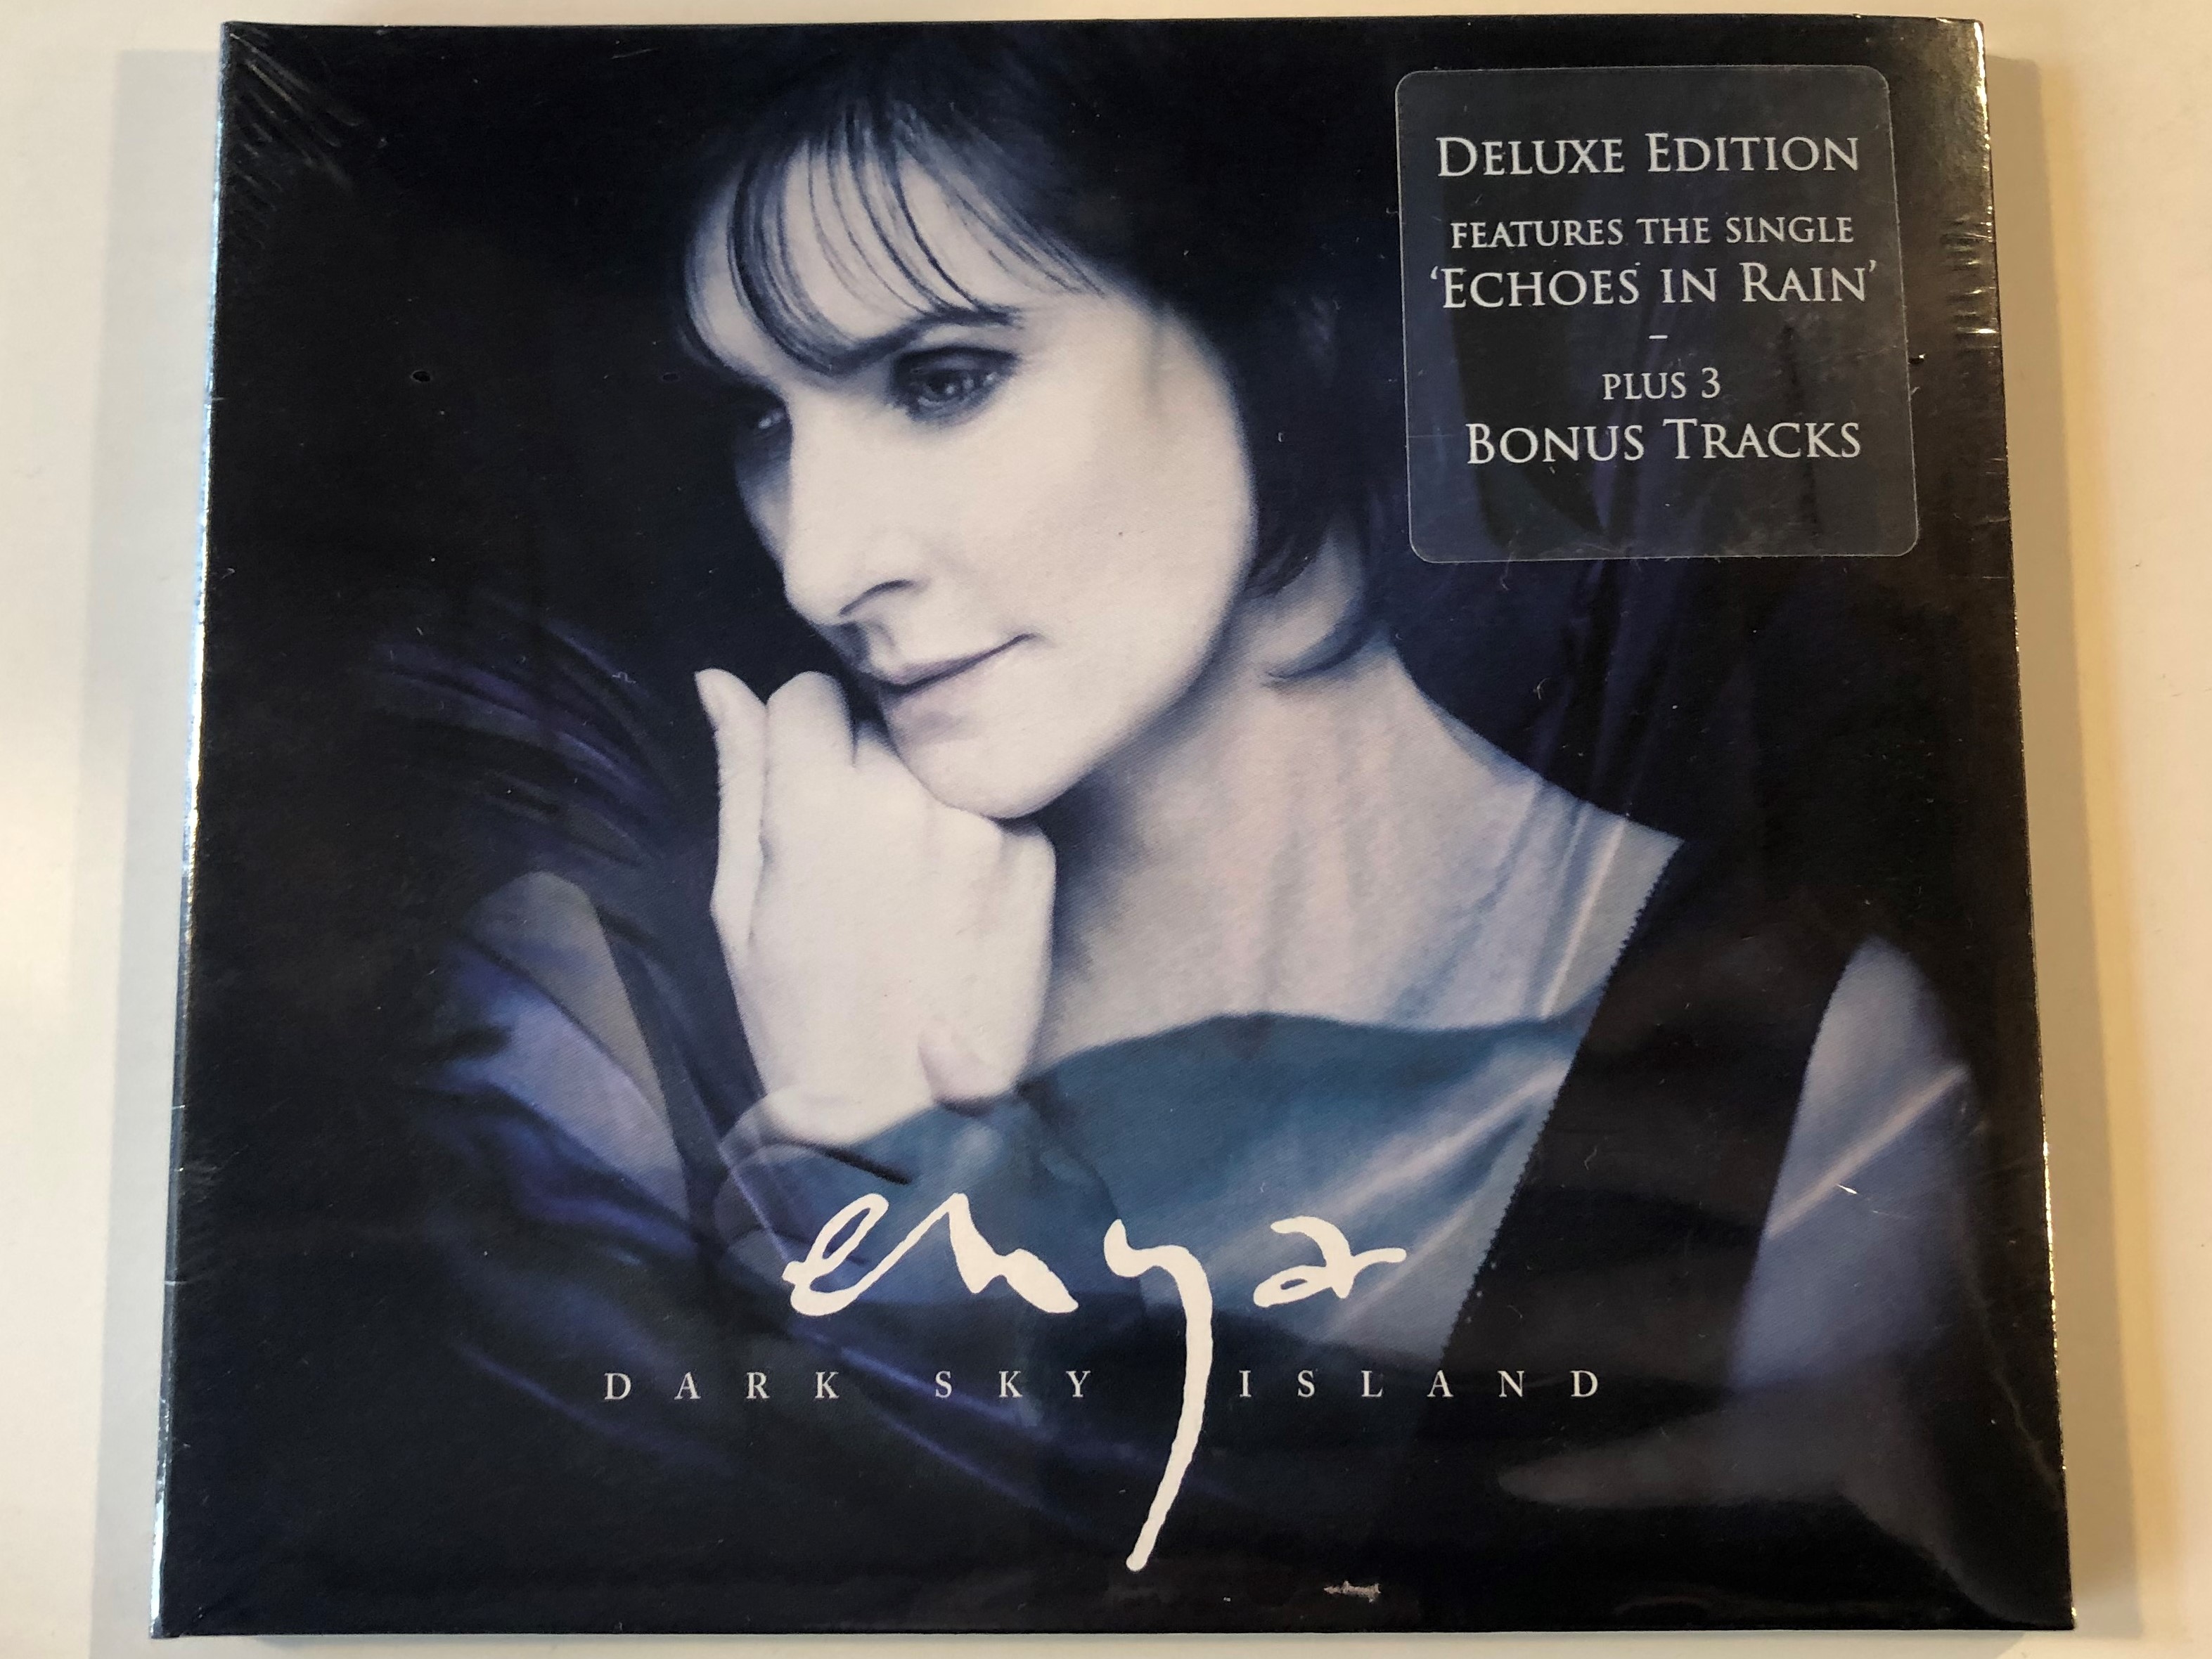 enya-dark-sky-island-deluxe-edition-features-the-single-echoes-in-rain-plus-3-bonus-tracks-warner-bros.-records-audio-cd-2015-0825646994441-1-.jpg